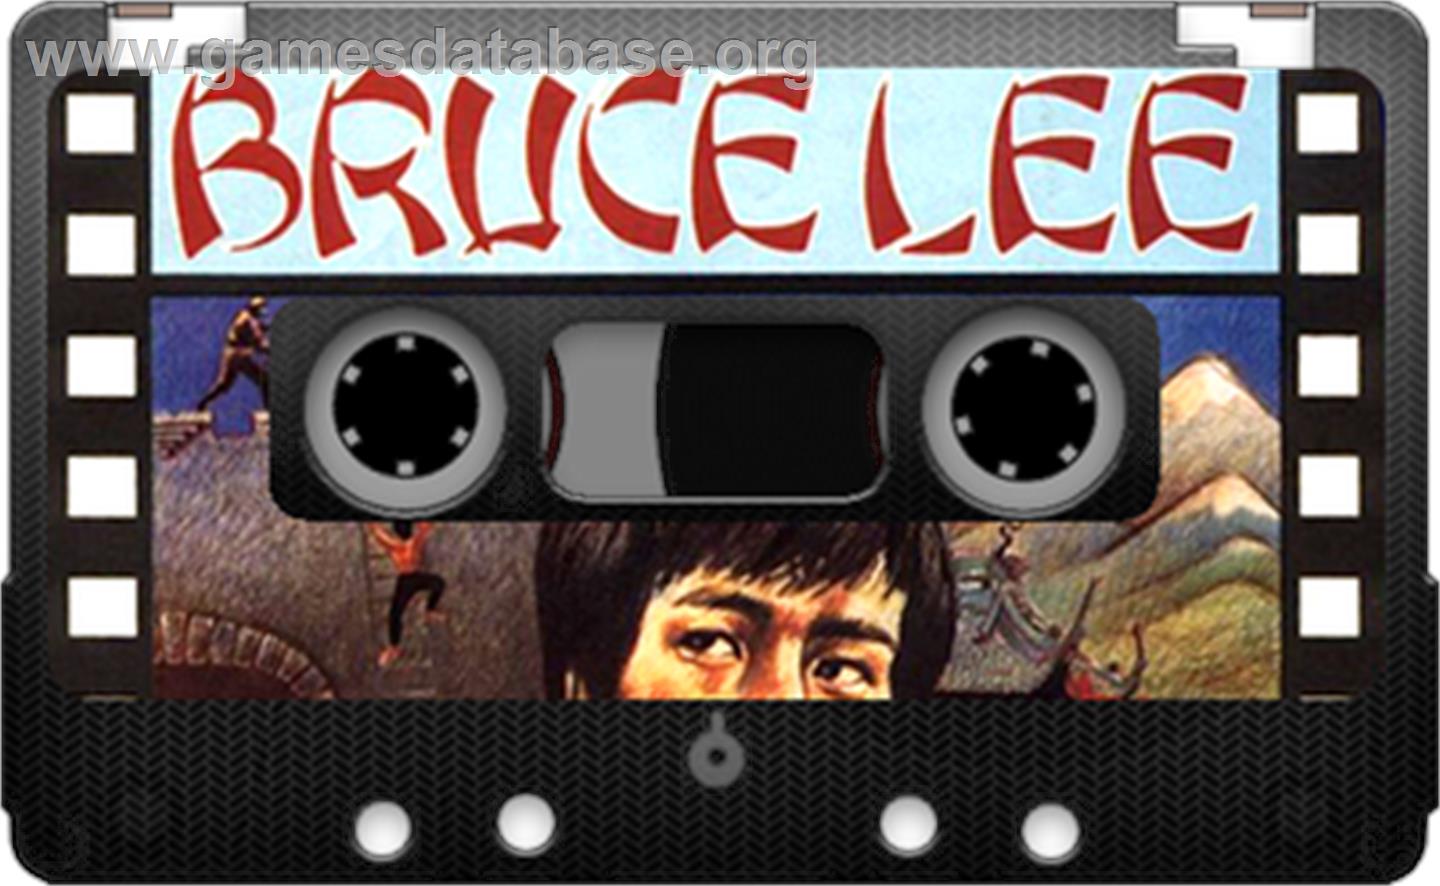 Bruce Lee - Sinclair ZX Spectrum - Artwork - Cartridge